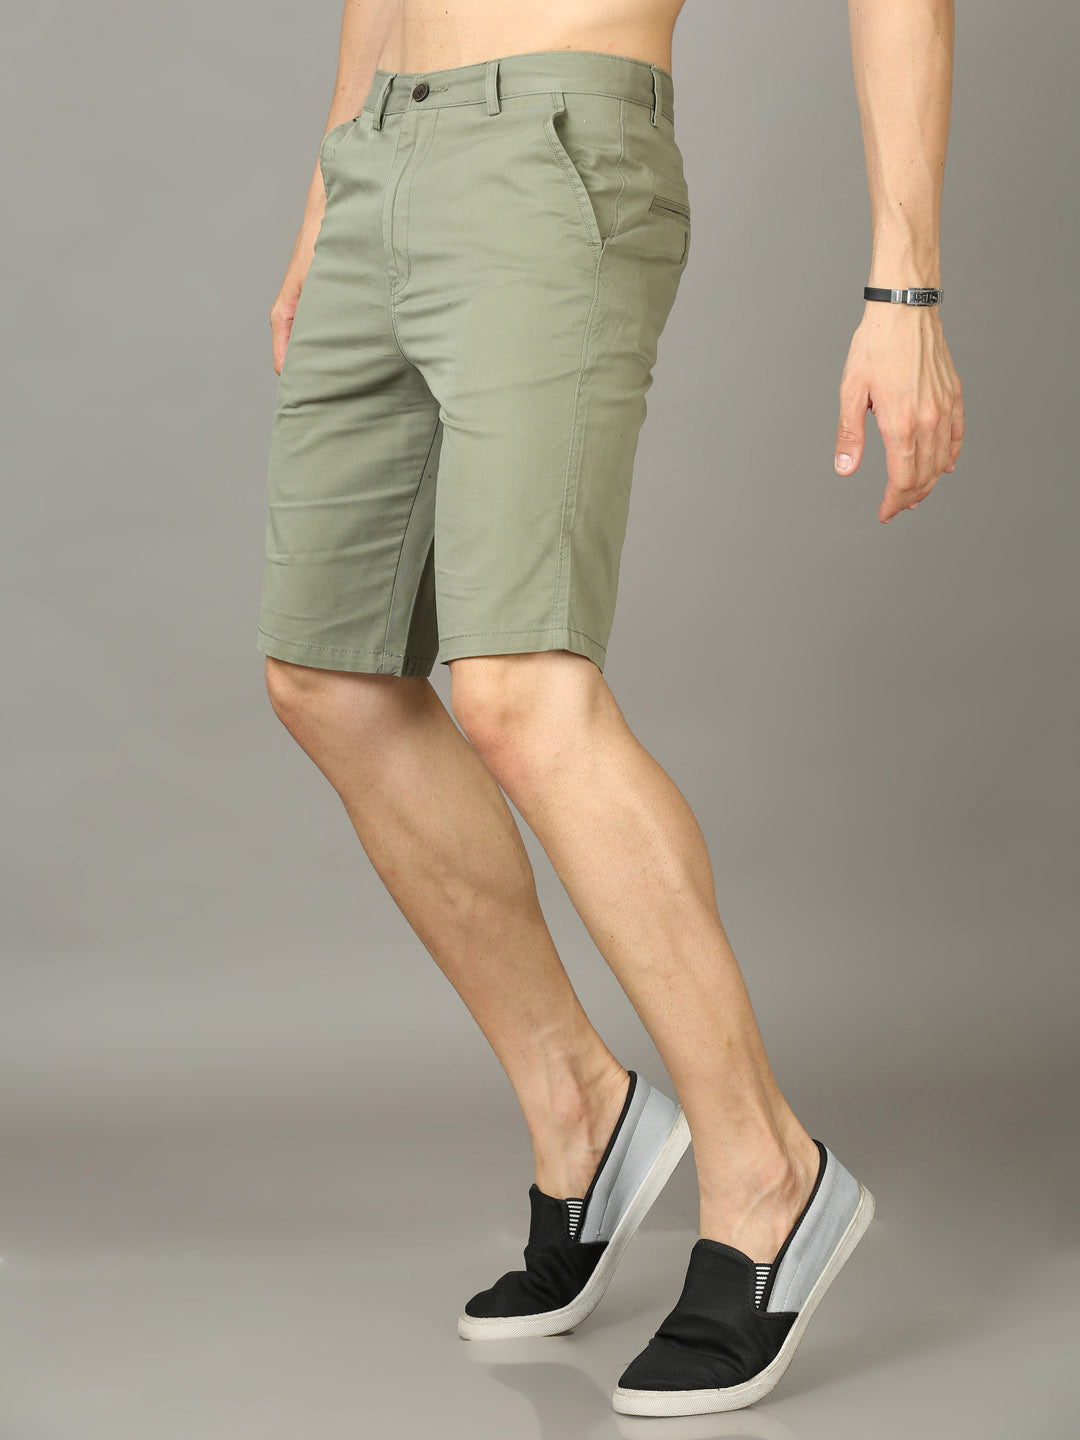 Classic Sage Green Chino Shorts Men's Shorts Bushirt   